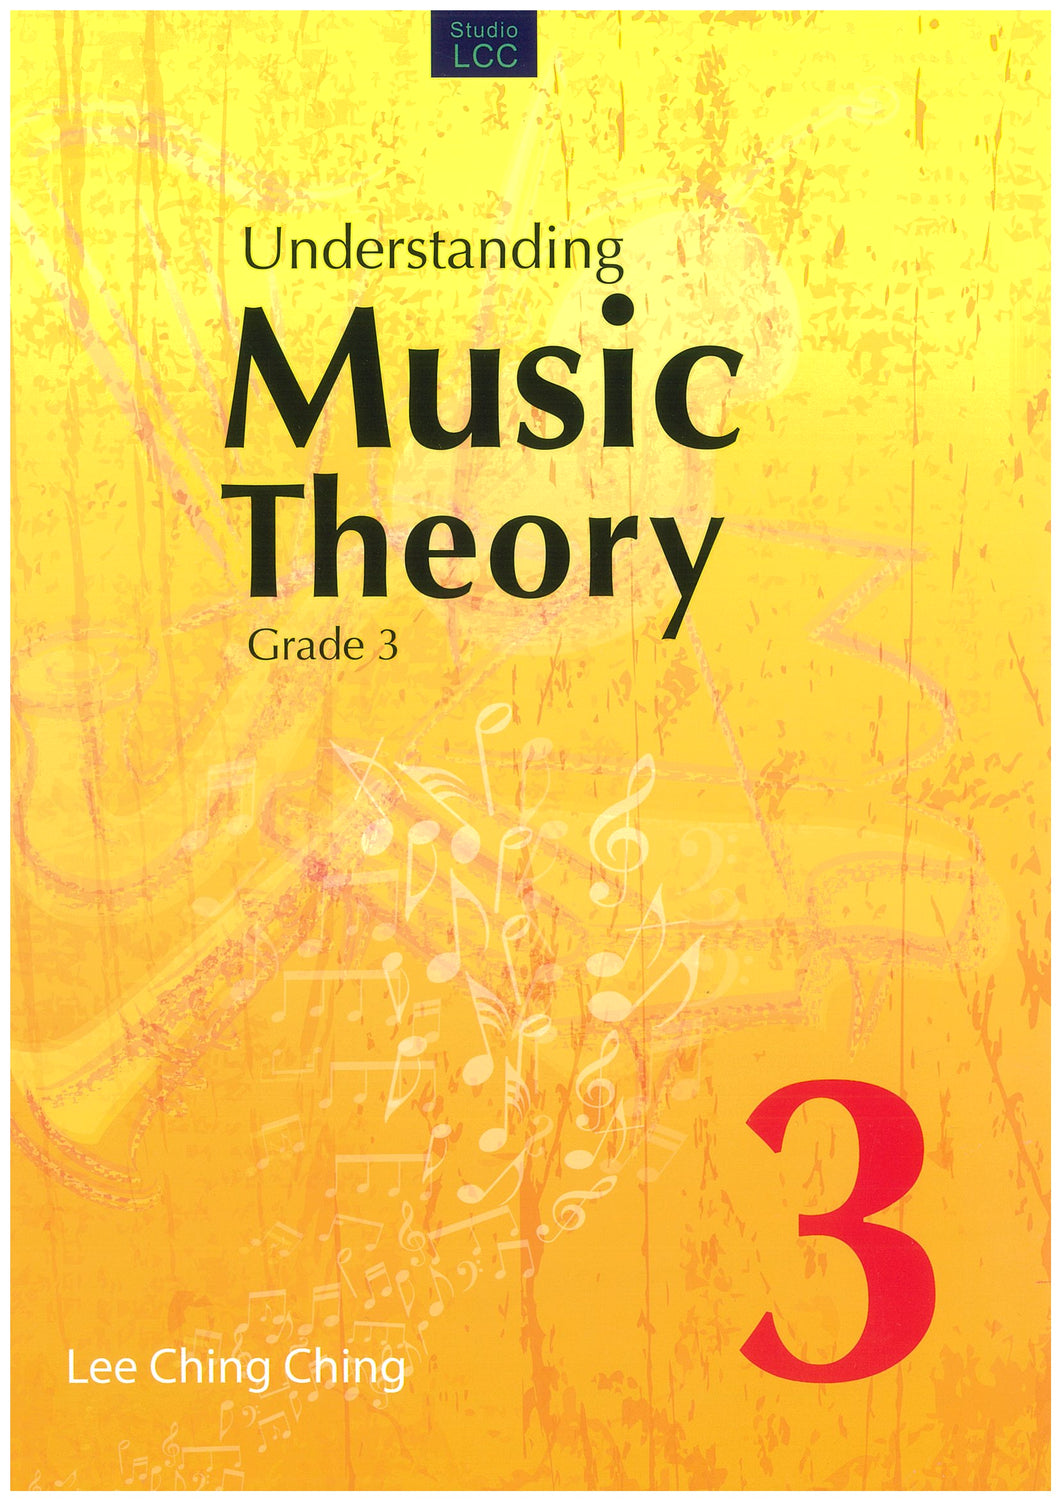 Understanding Music Theory Grade 3 : Lee Ching Ching